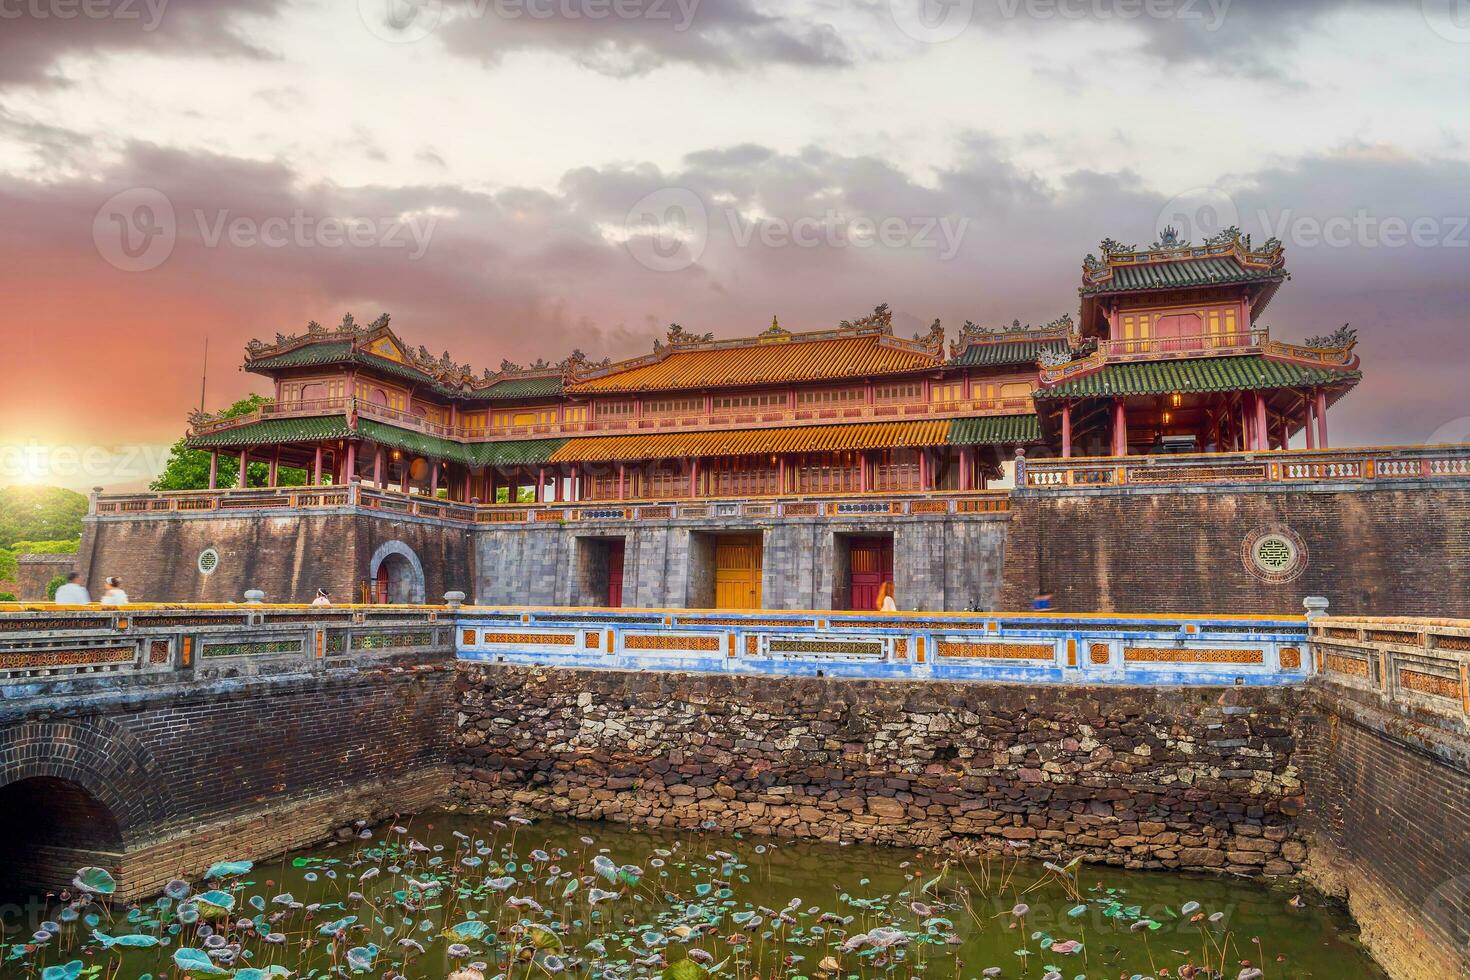 meridian Port av kejserlig kunglig palats av nguyen dynasti i nyans, vietnam foto